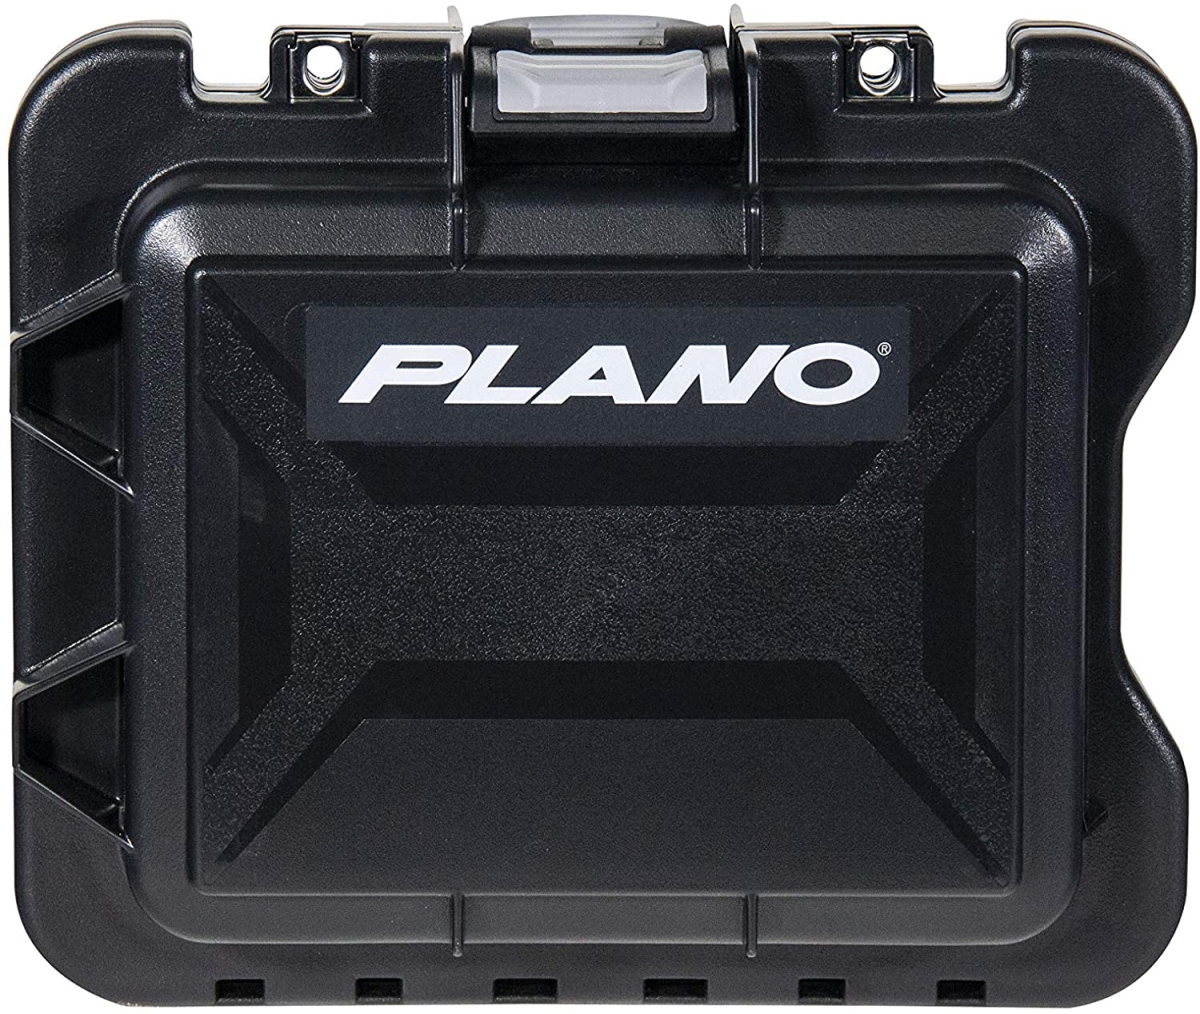 Picture of Plano PLN-PLAM9130 Field Locker Element Cases